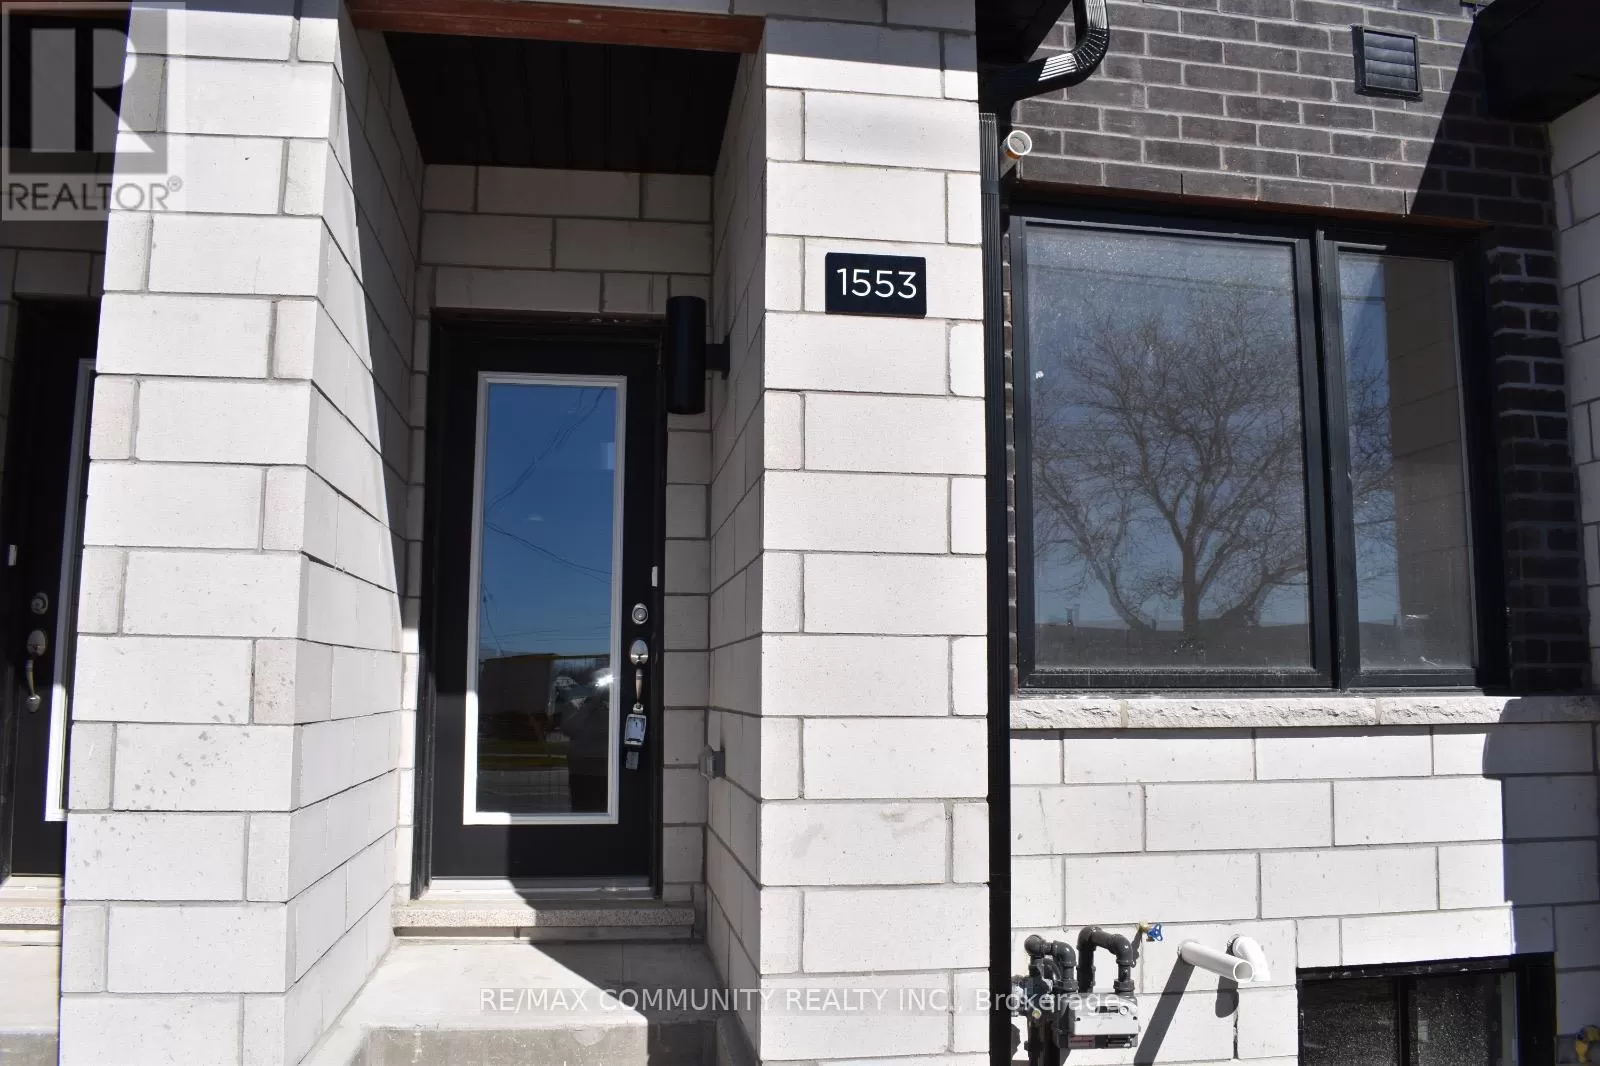 Row / Townhouse for rent: #0015-8 -1553 Midland Ave, Toronto, Ontario M1P 0G3